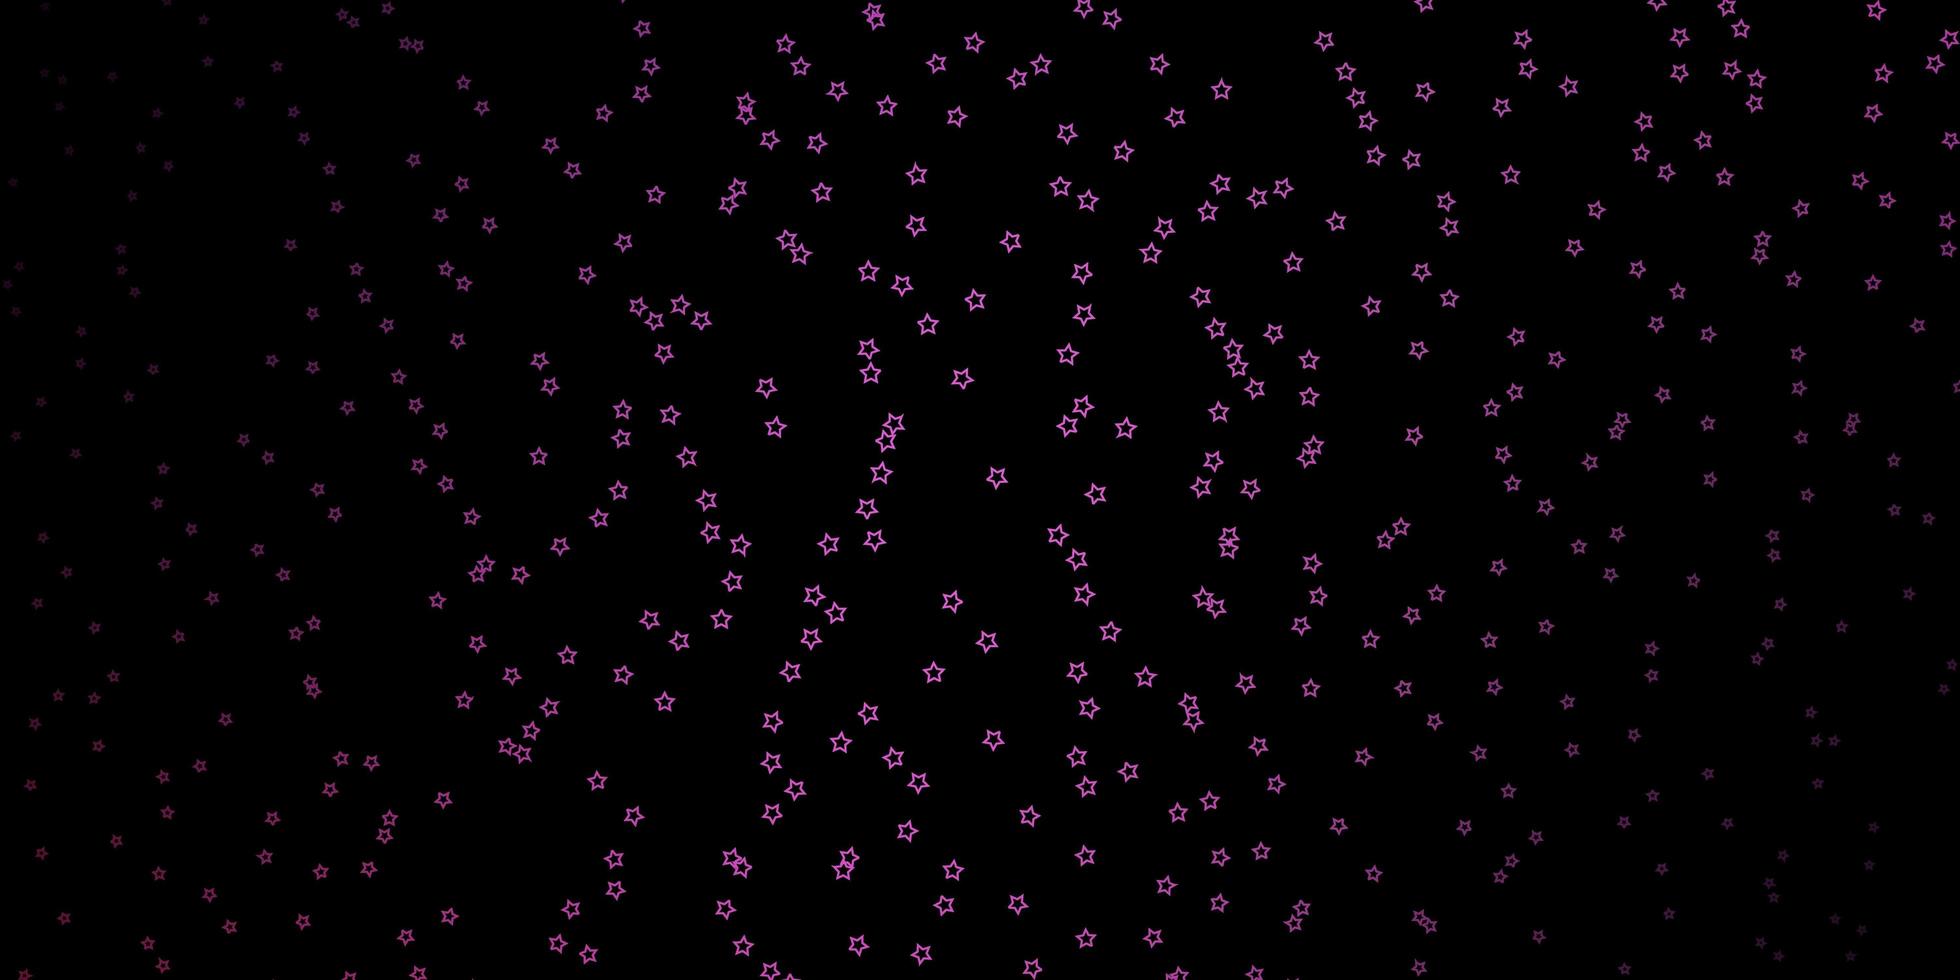 plantilla de vector de color púrpura oscuro, rosa con estrellas de neón.